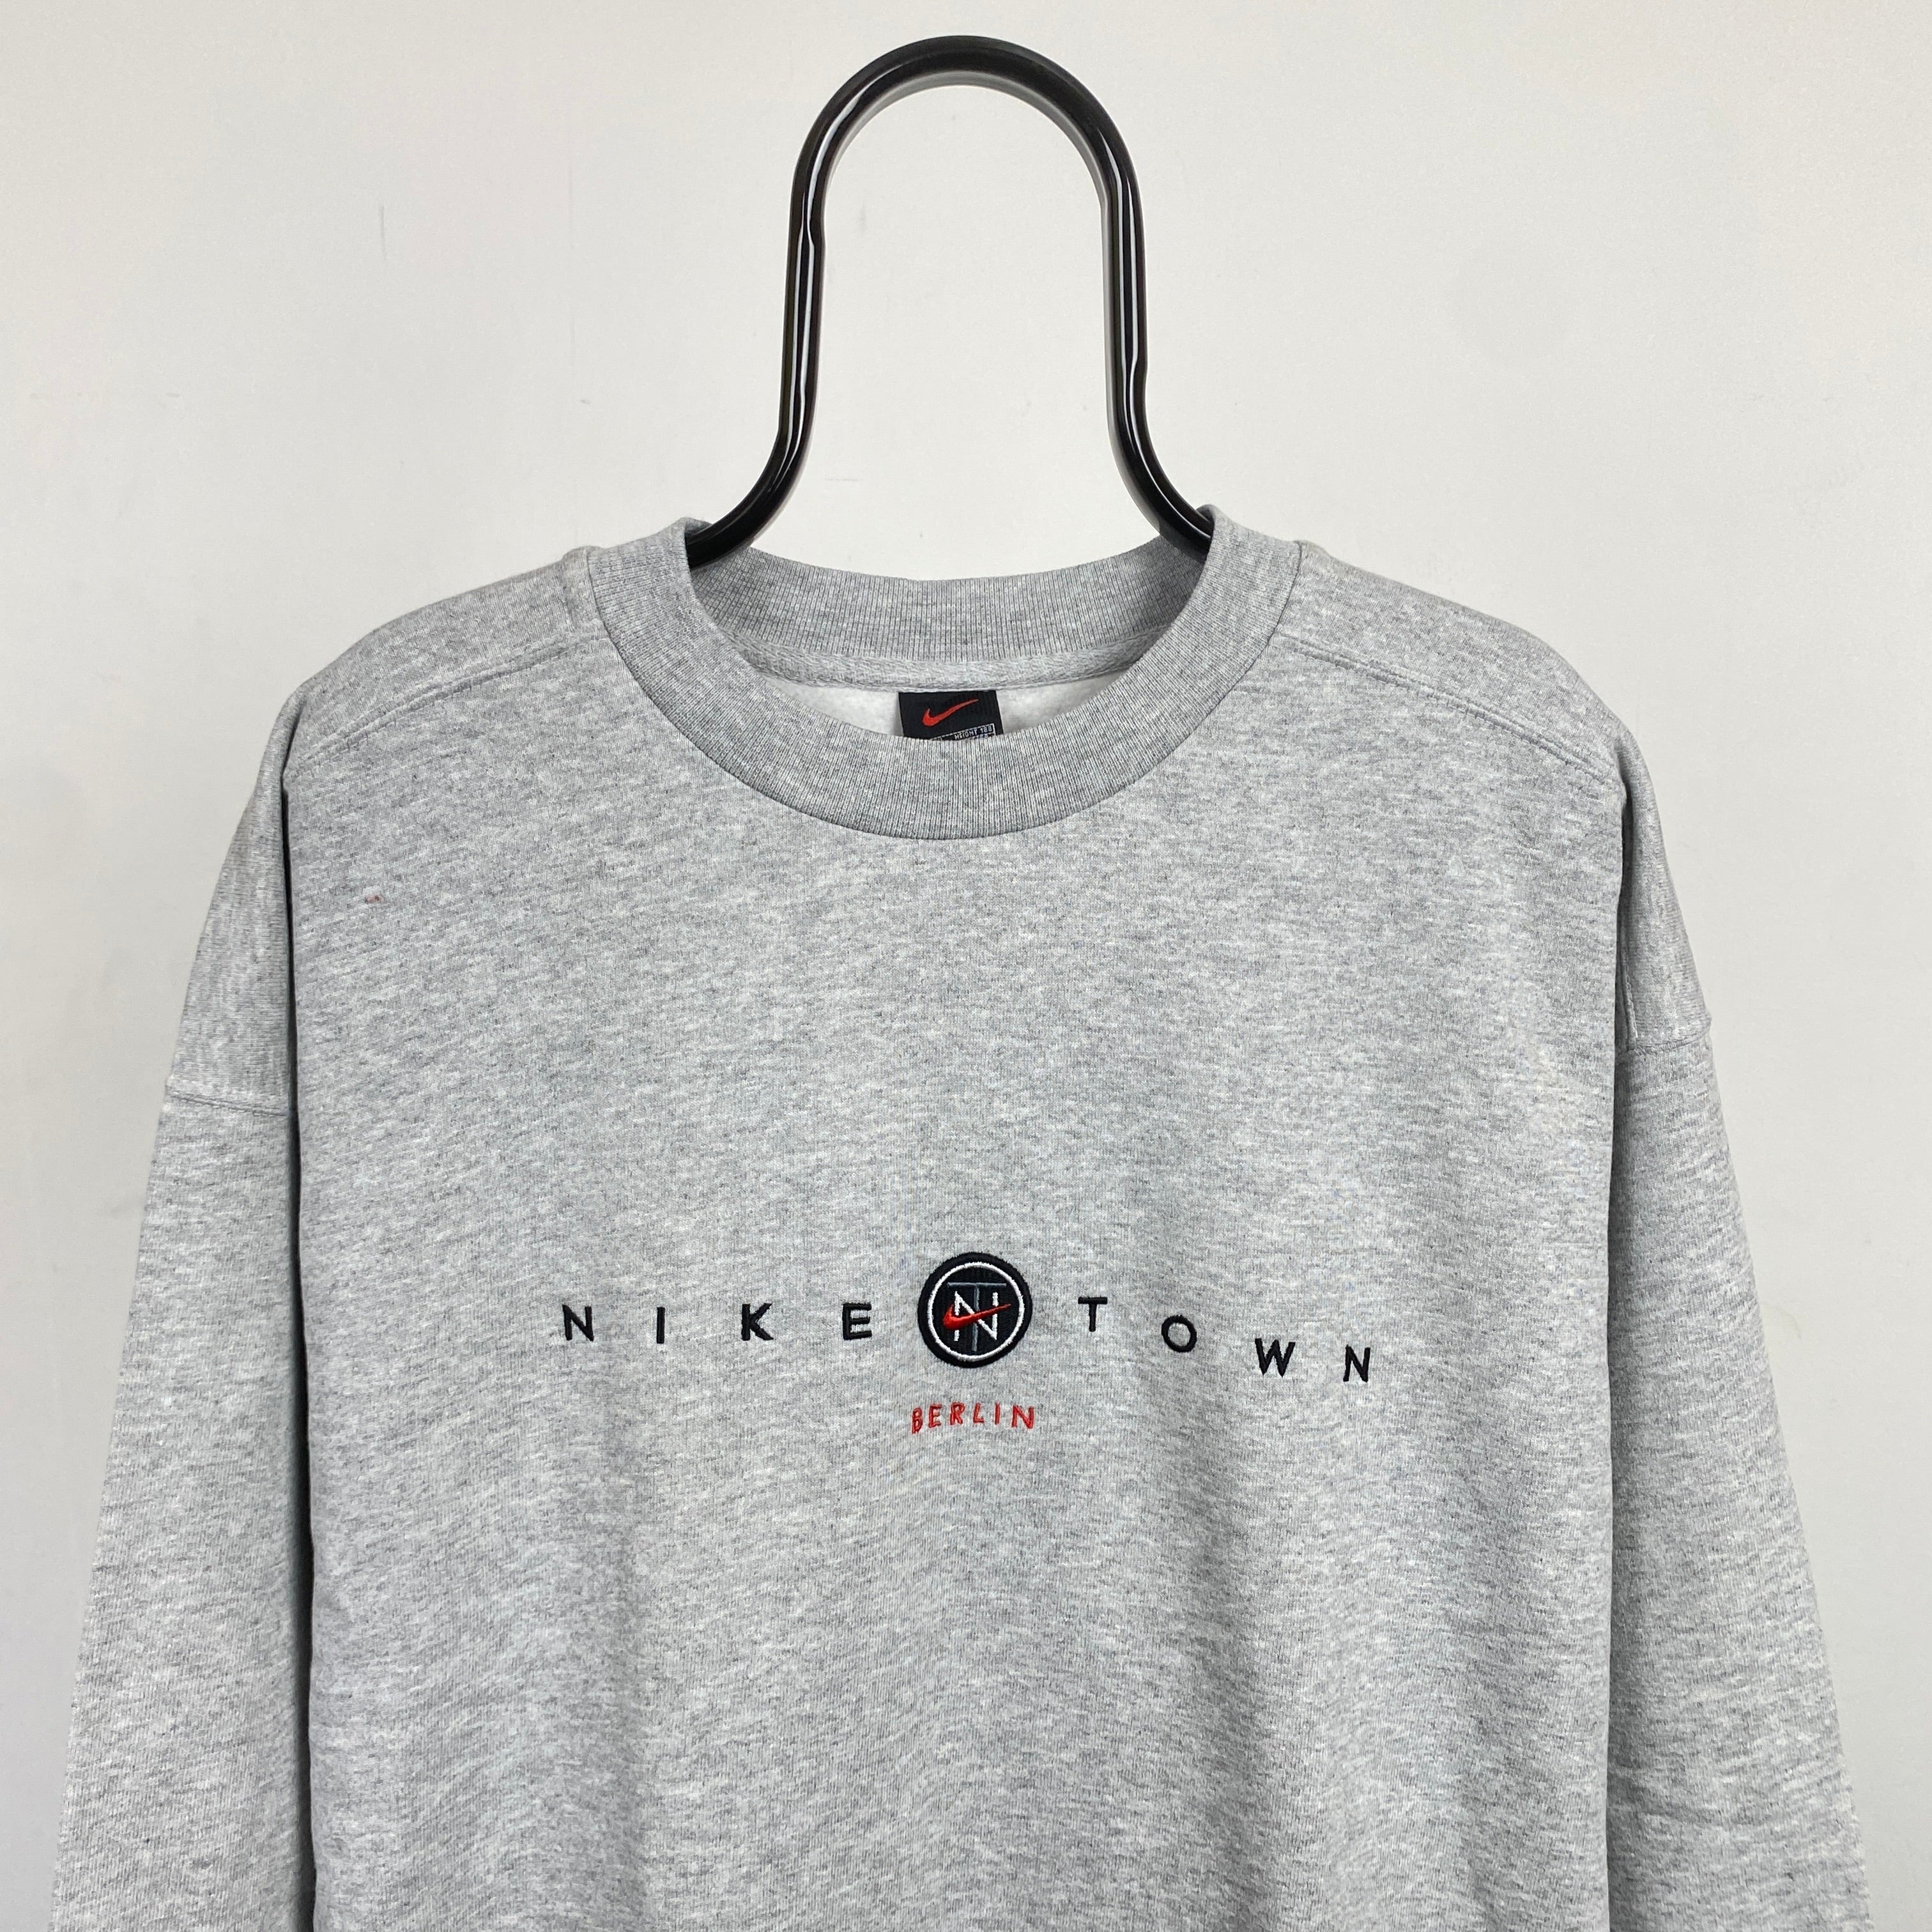 90s Nike Town Berlin Sweatshirt Grey XL